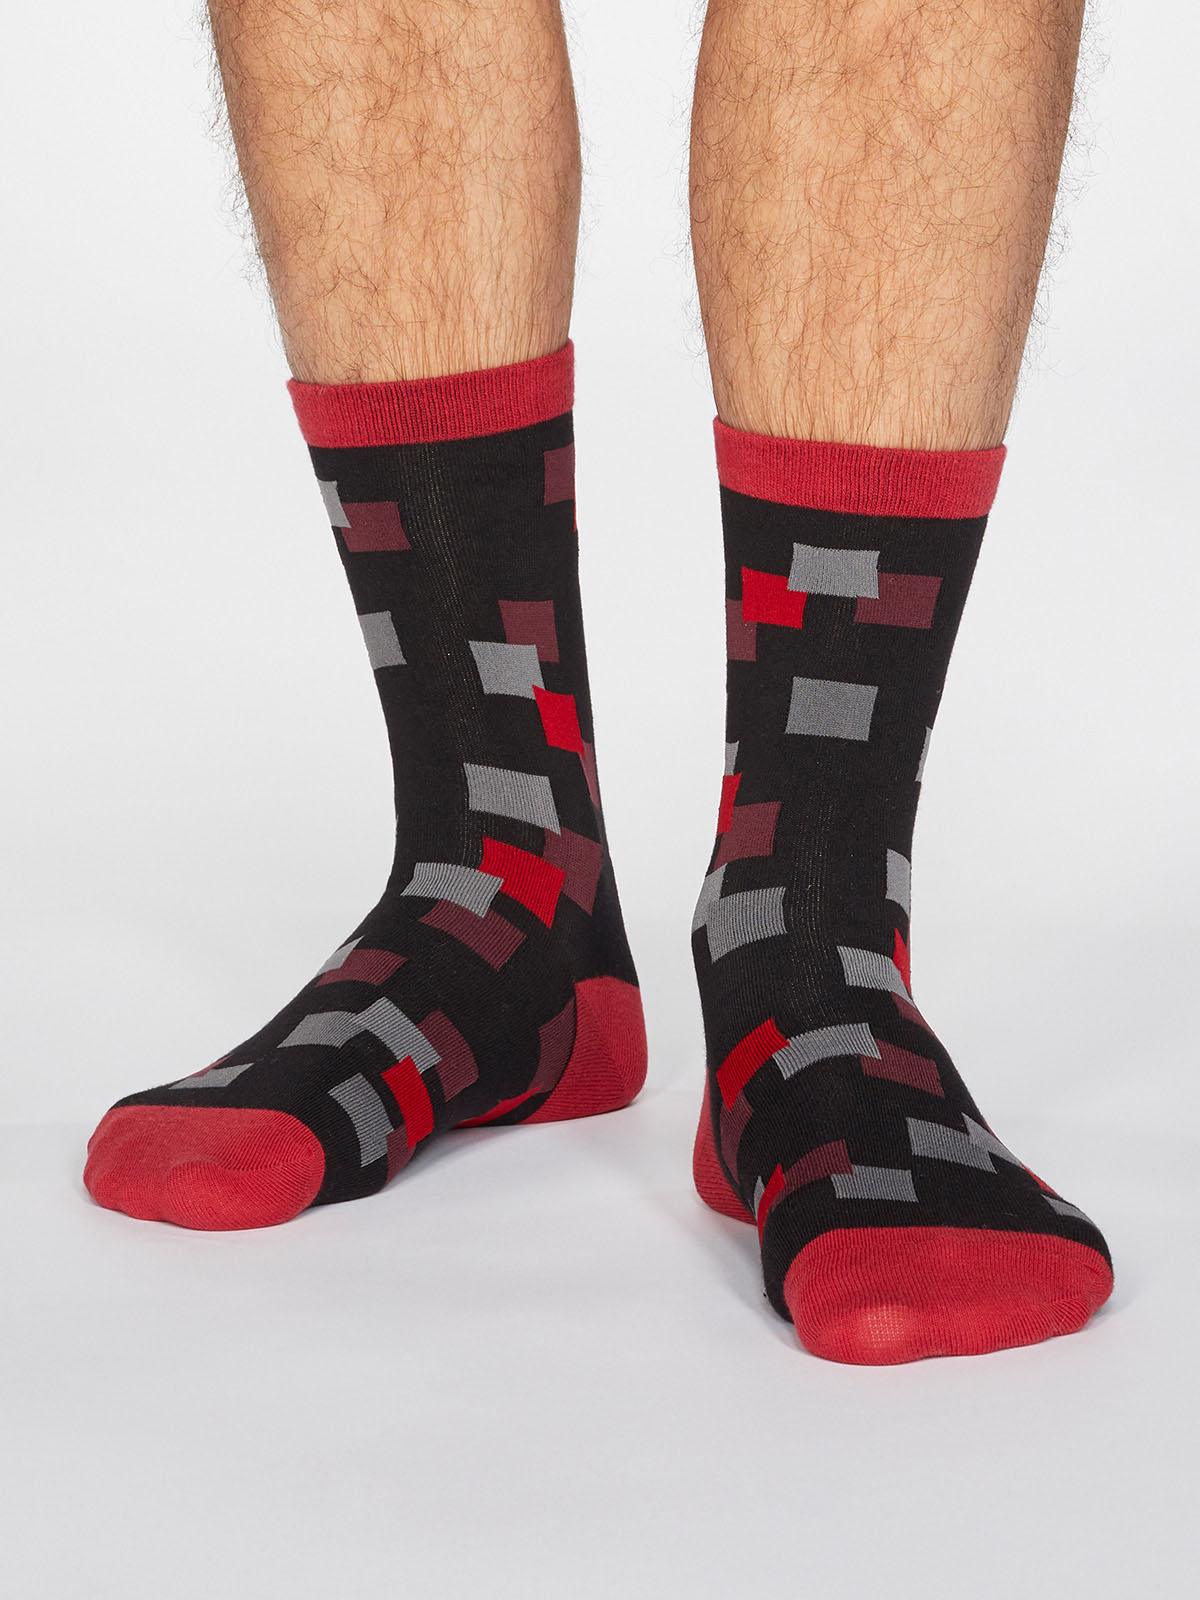 Evan Square Socks - Black - Thought Clothing UK